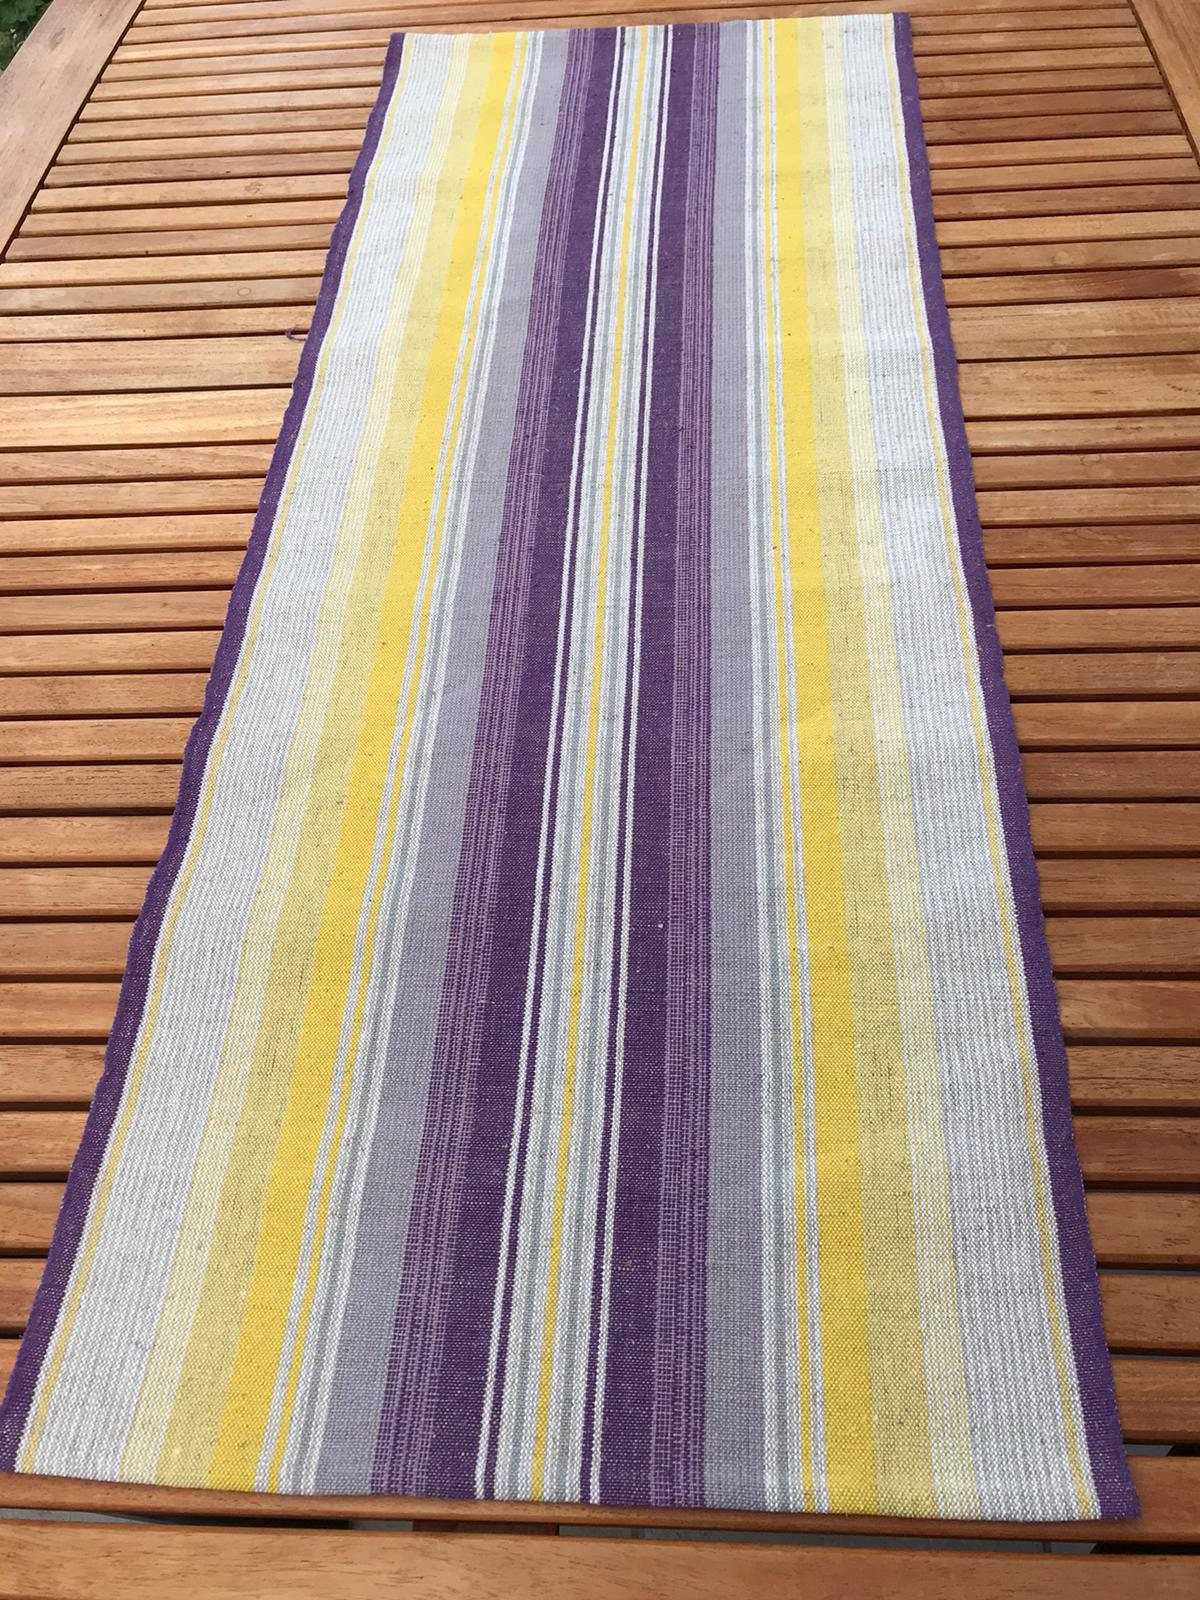 Swedish Woven Tablerunner/Tablecloth Vintage Scandinavian Textile Cotton Beige Yellow Purple Rustic 